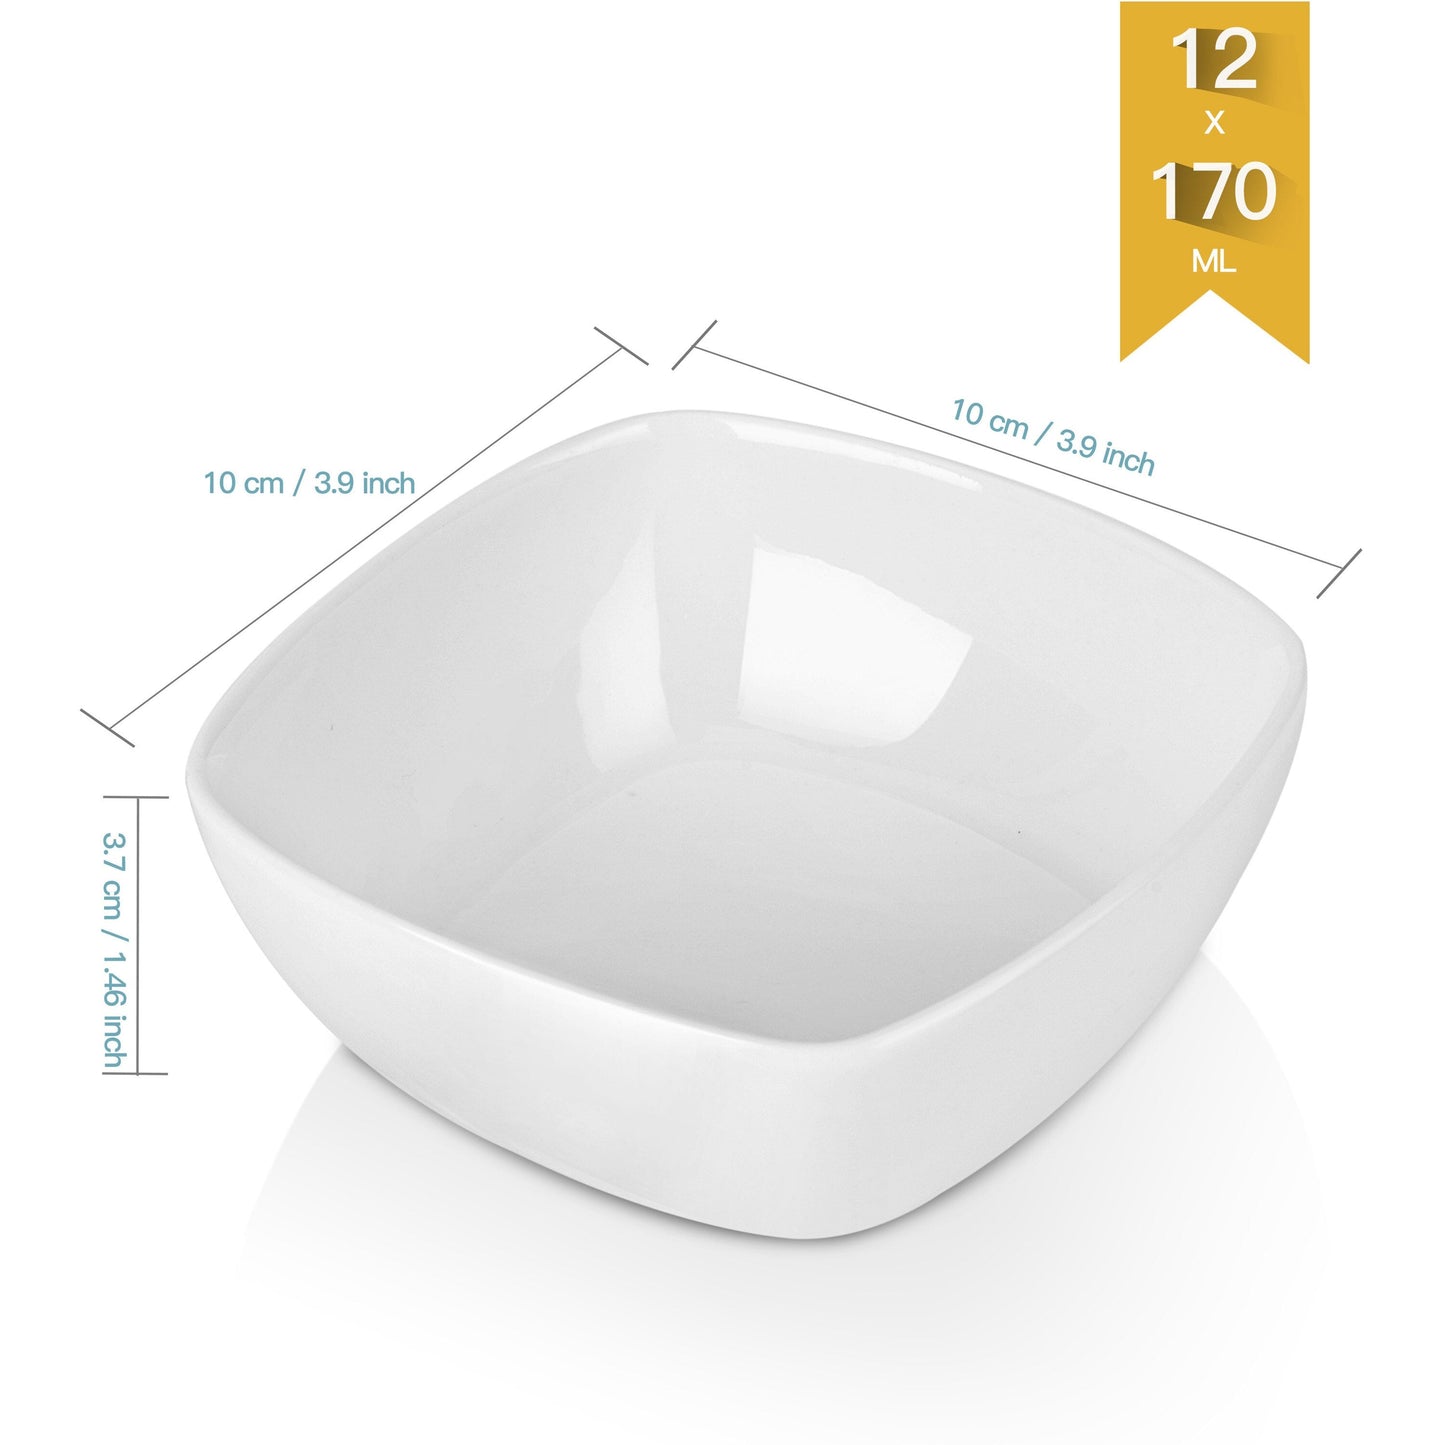 White Porcelain  Set of 6 Ramekins Dessert/Snack Bowl (4") - Nordic Side - Bowl, Breakfast, Cream, Cup, Dessert, Dishes, Fruit, Kitchen, MALACASA, of, Plate, Porcelain, Pudding, Ramekins, Set